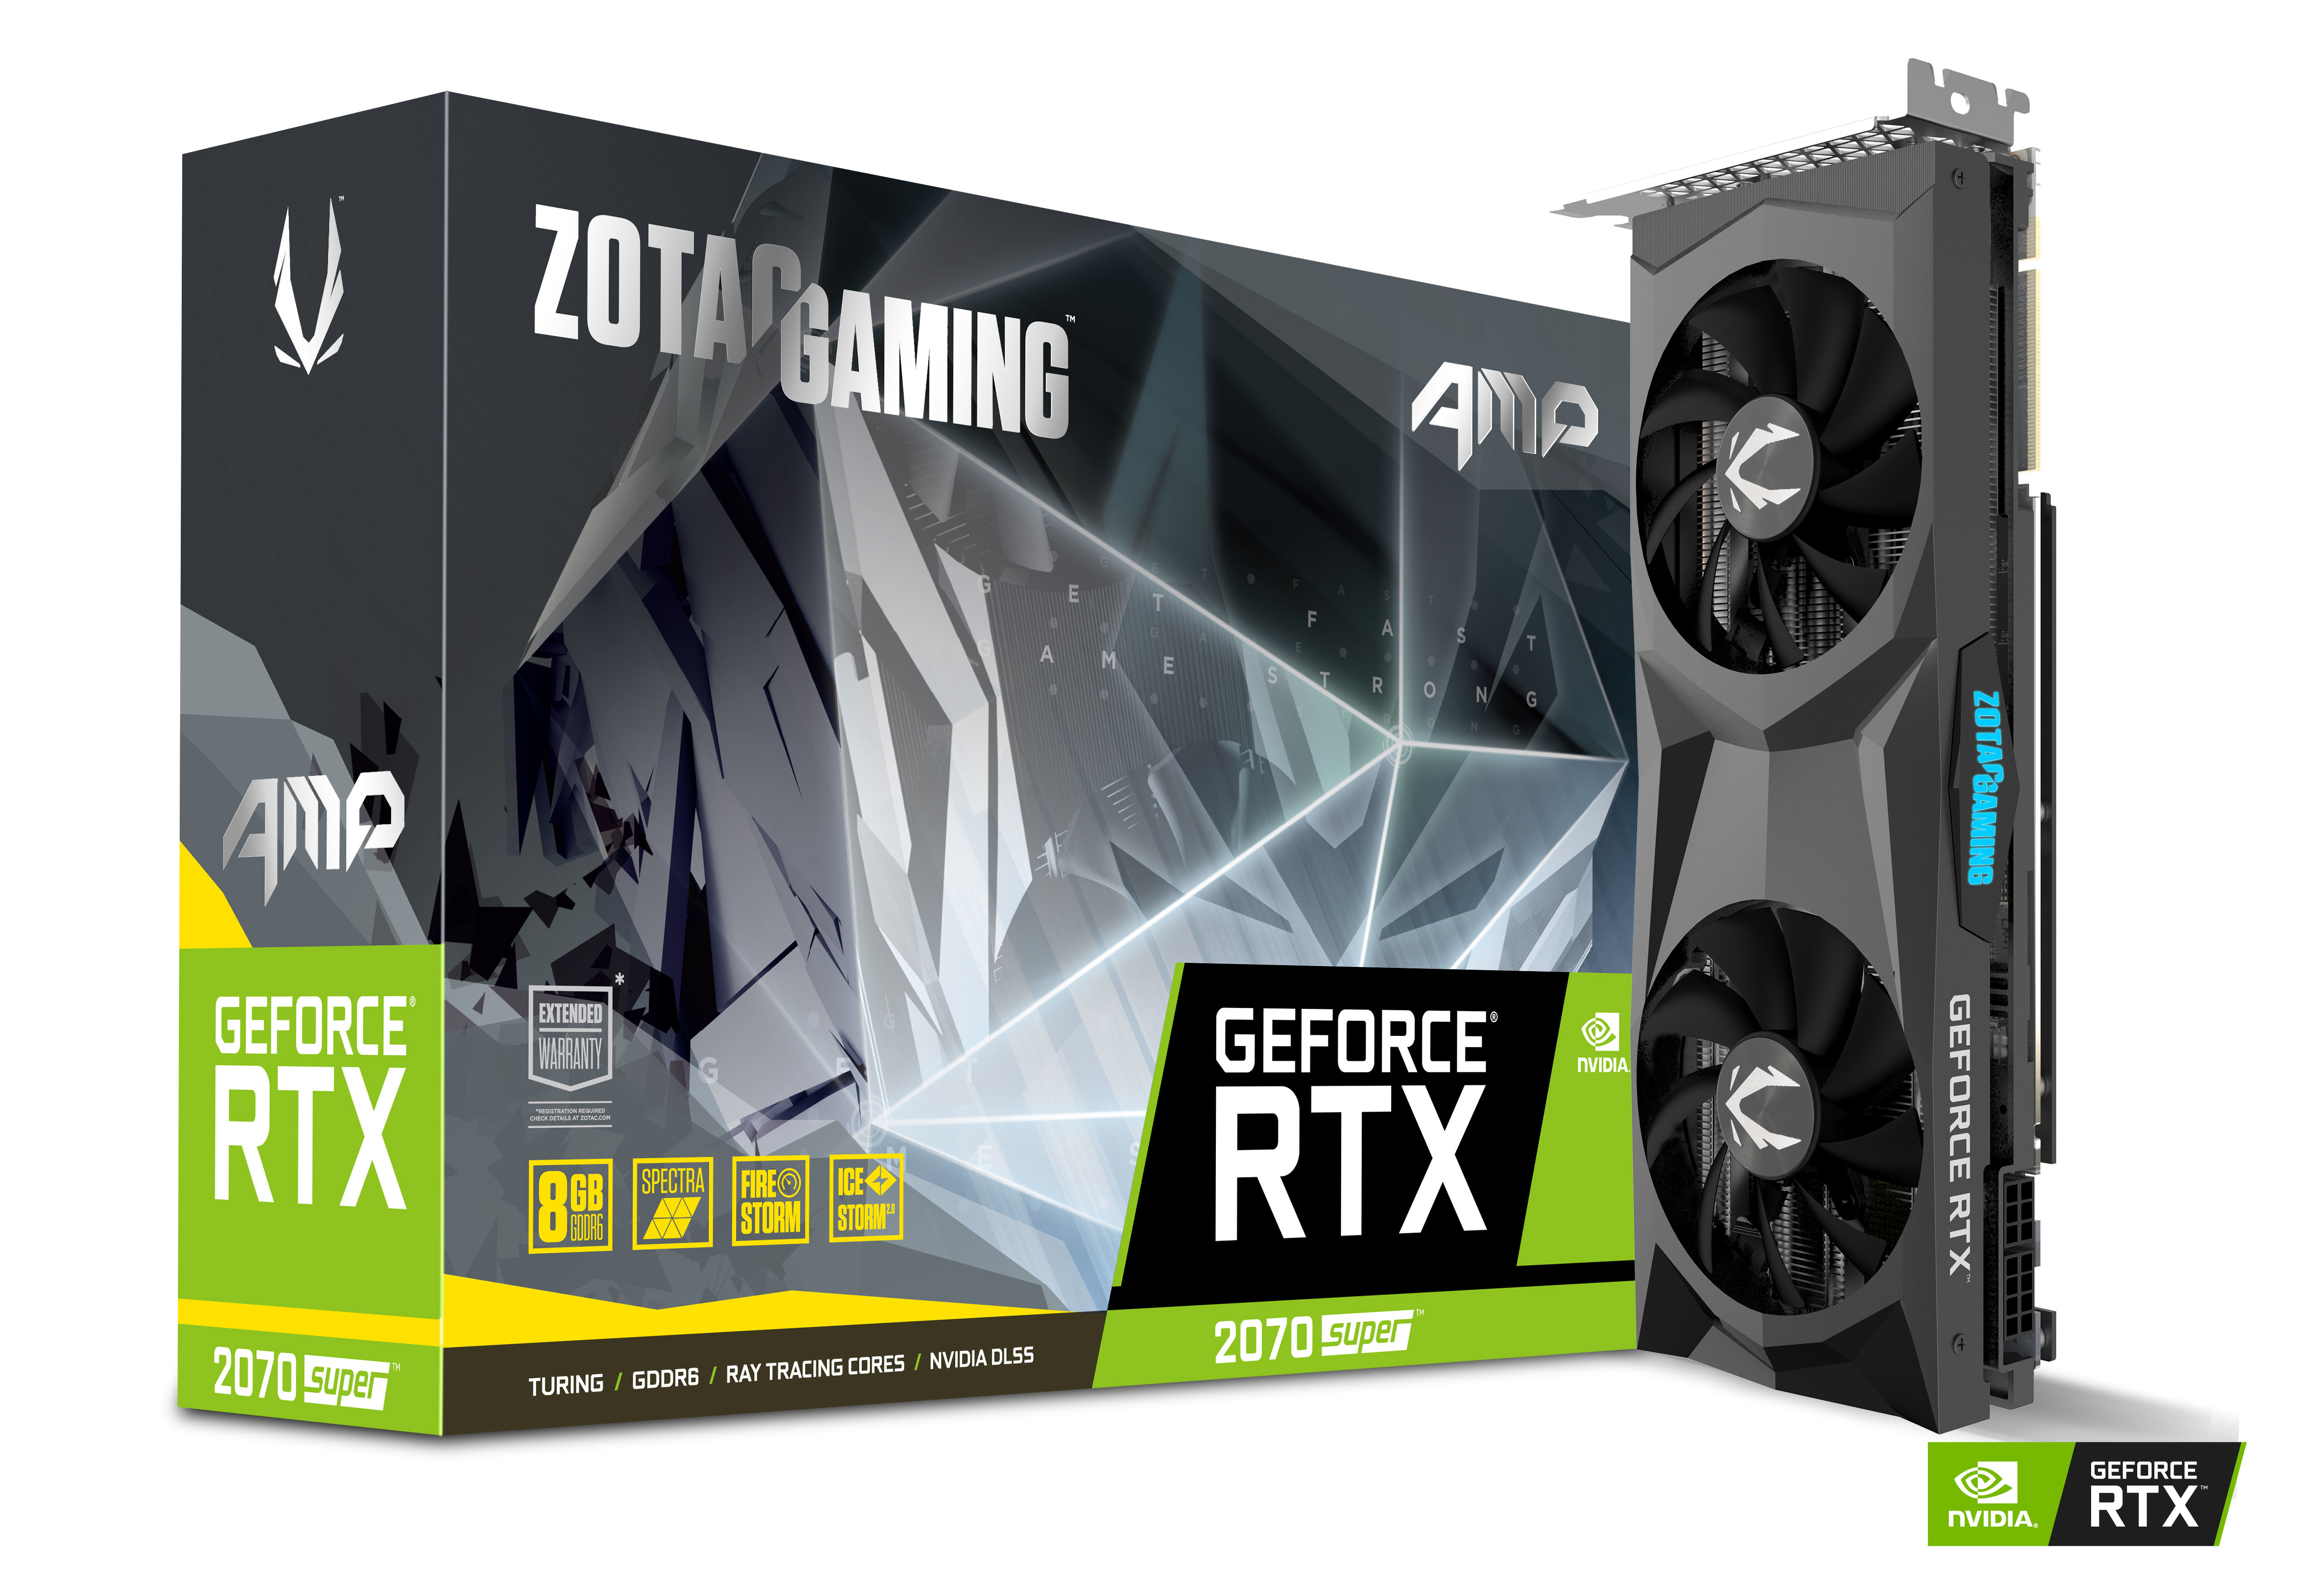 ZOTAC GAMING GeForce RTX 2070 SUPER AMP | ZOTAC